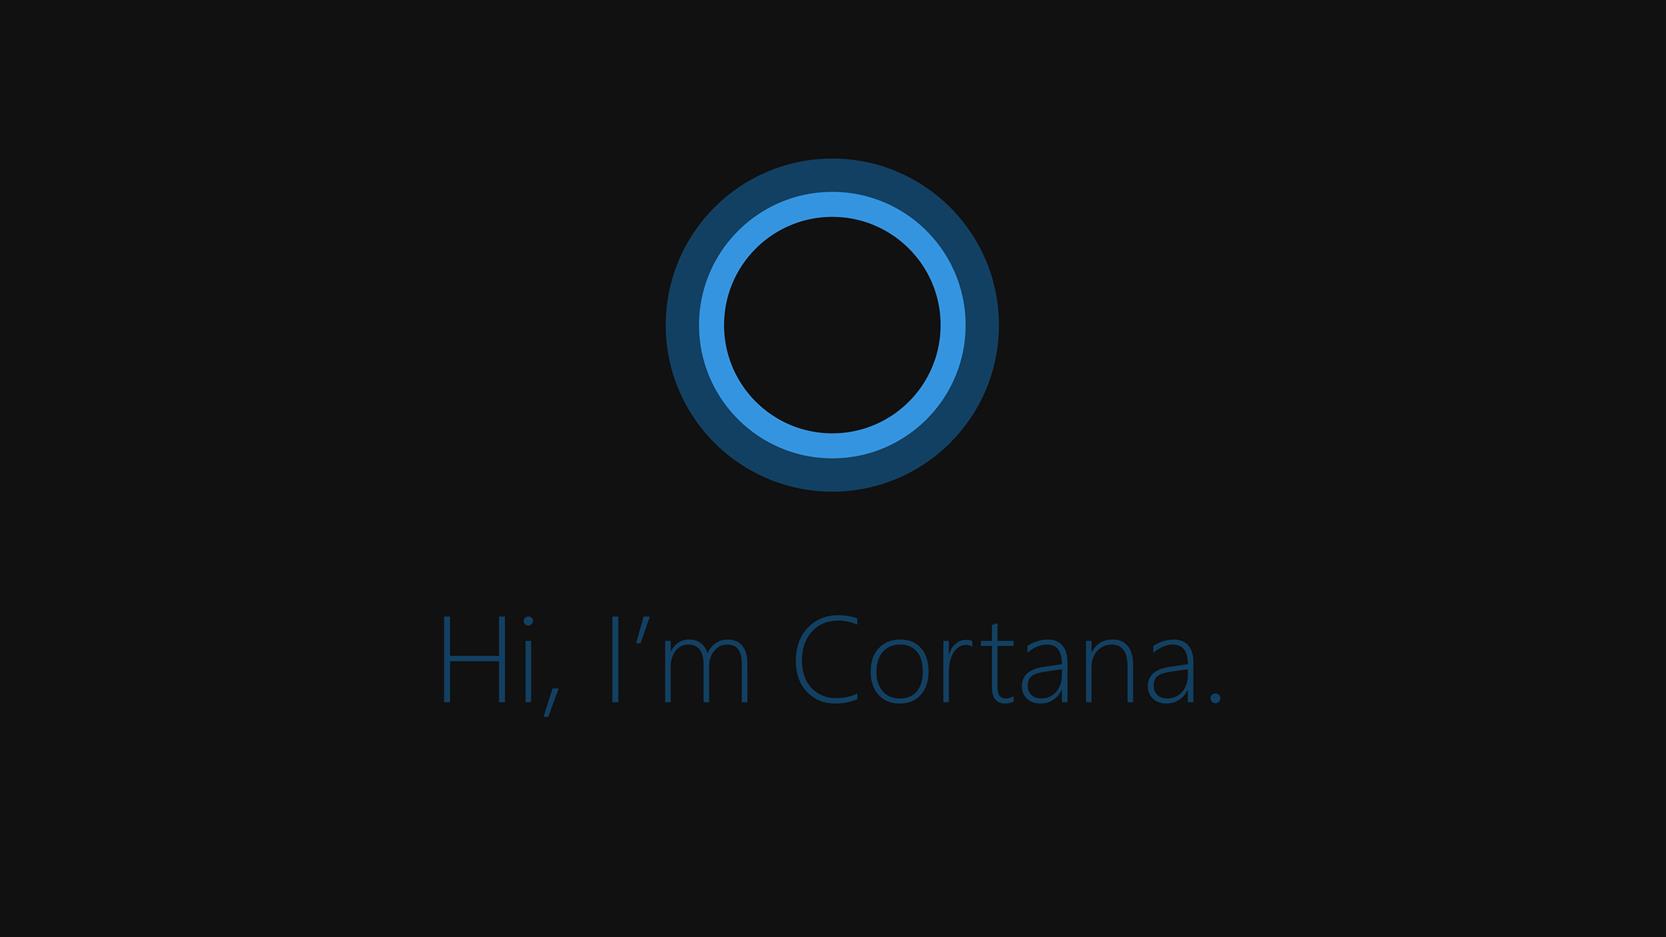 Cortana, Windows 10, minimalism, text, black background, illuminated, HD wallpaper